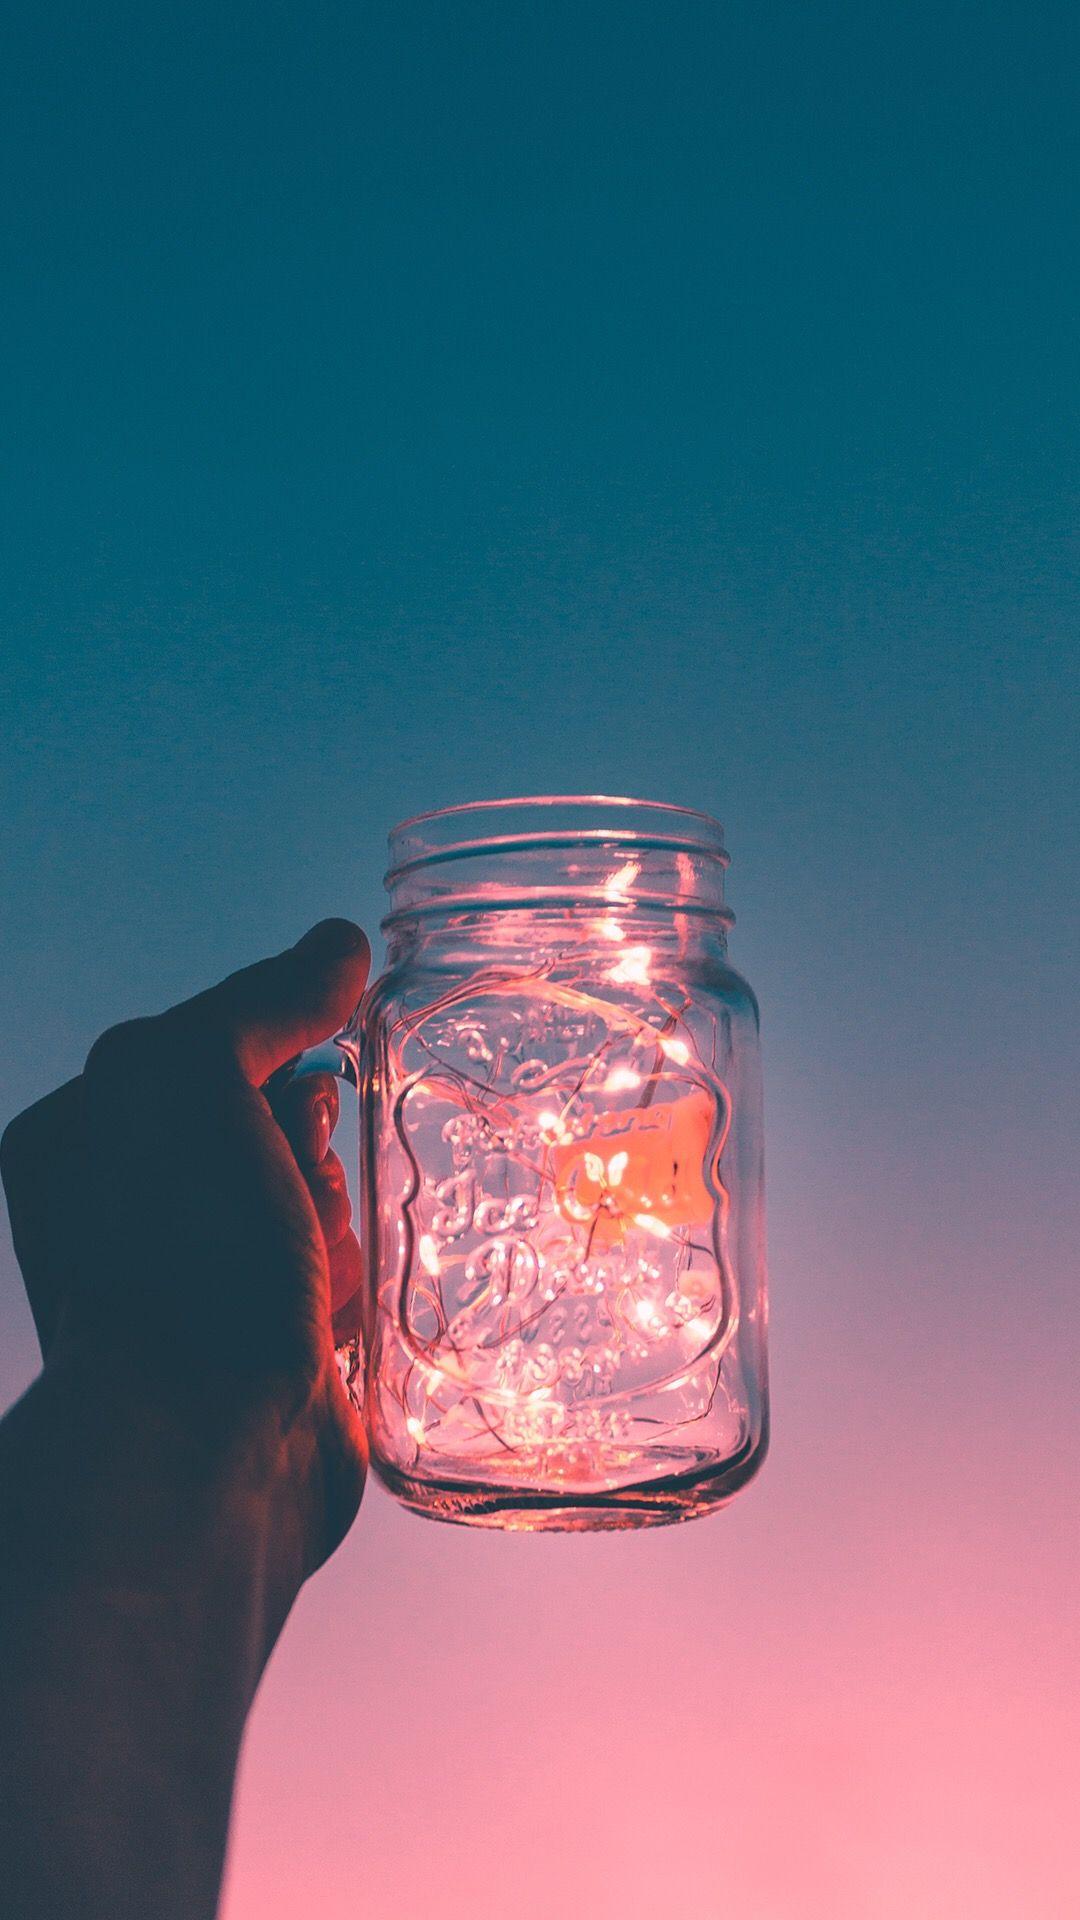 Jar of fireflies wallpaper. Mason jar diy, Diy mason jar lights, Mason jar lighting